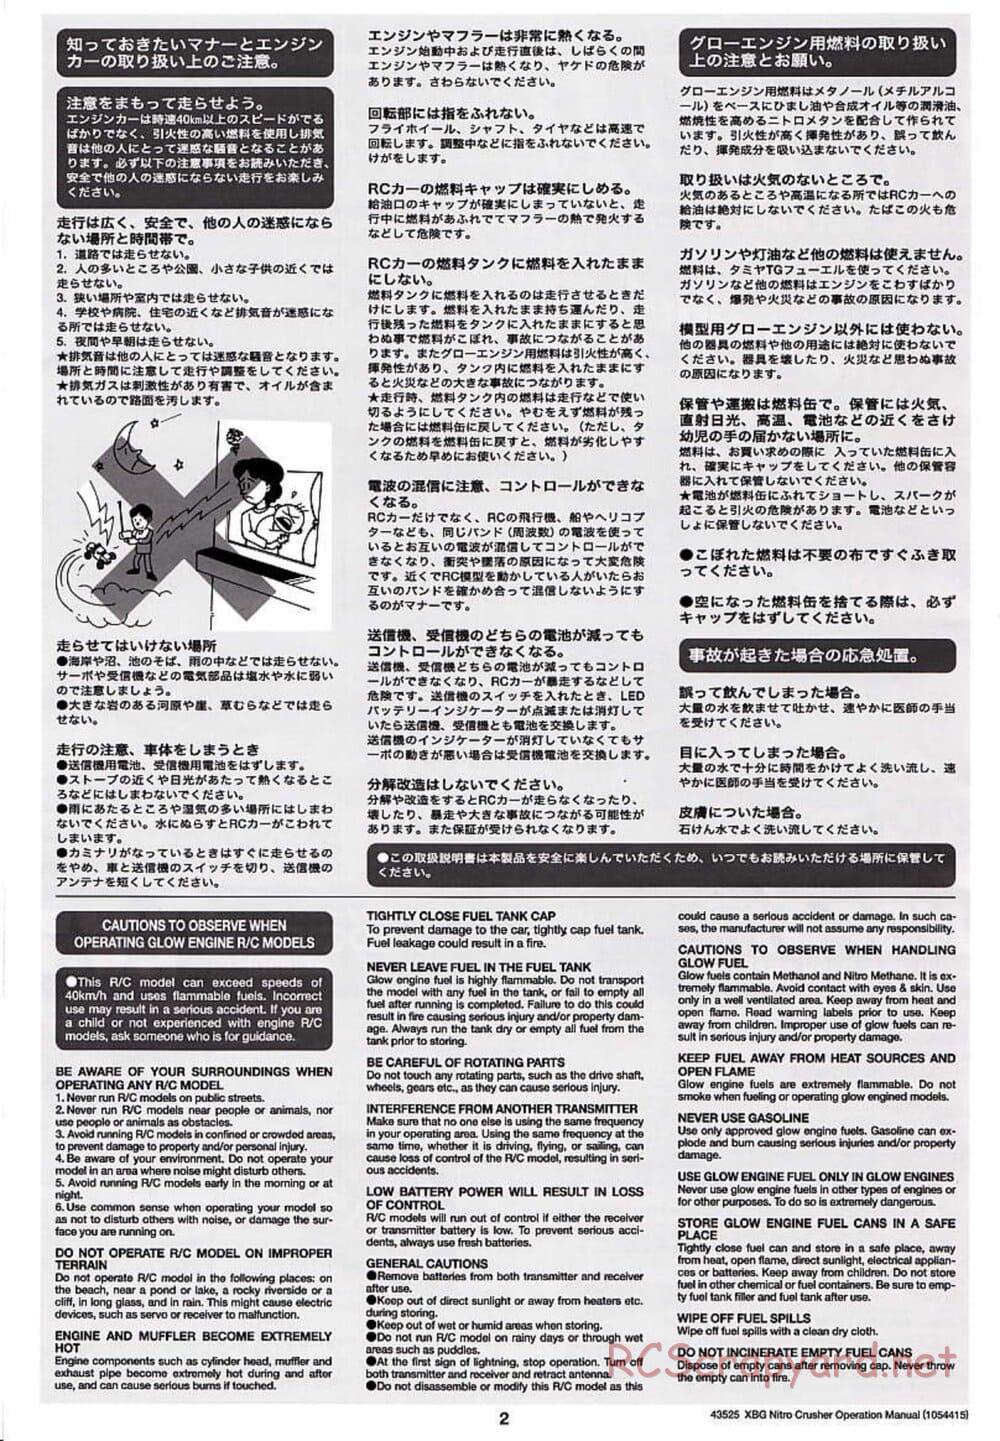 Tamiya - Nitro Crusher - NDF-01T - Operating Manual - Page 2